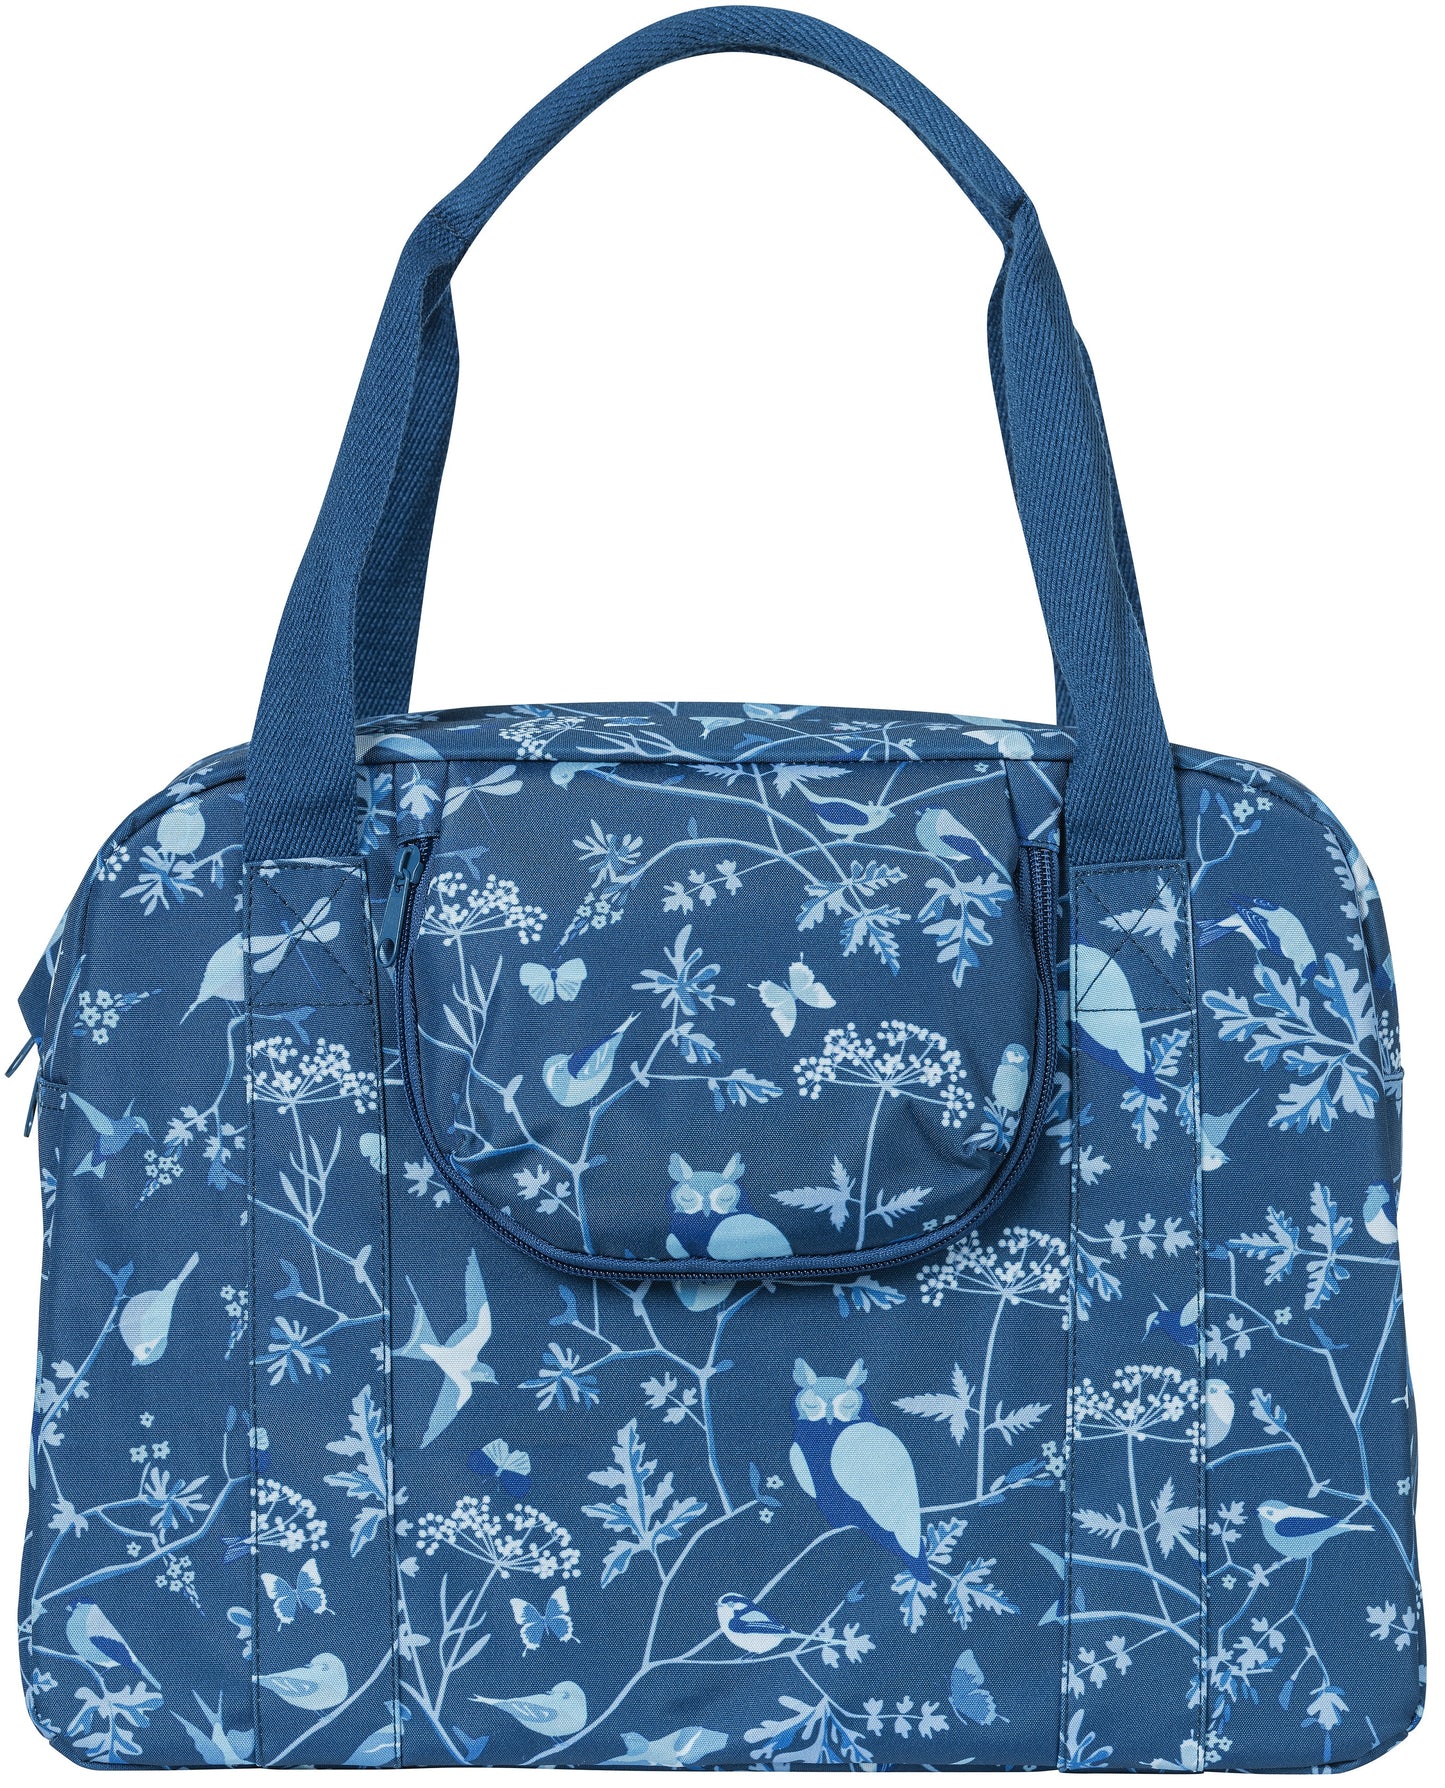 Basil Wanderlust Carry All Bag - Bolso de bicicleta azul con estampado de pájaros - Repelente de agua - 18L